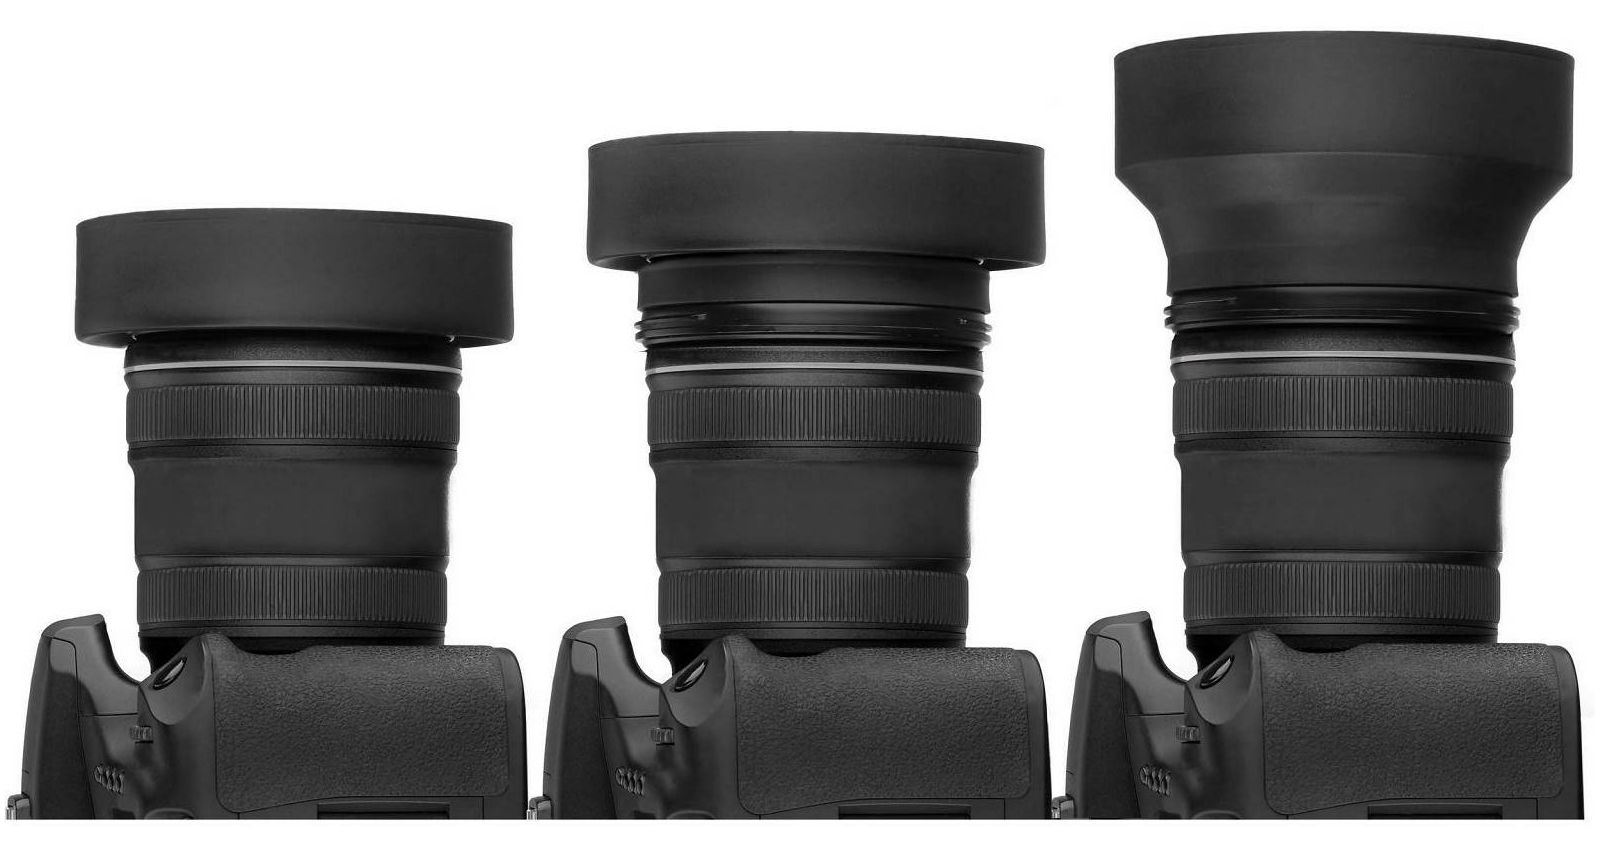 Weifeng univerzalno sjenilo gumeno lens hood za objektive s navojem 52mm